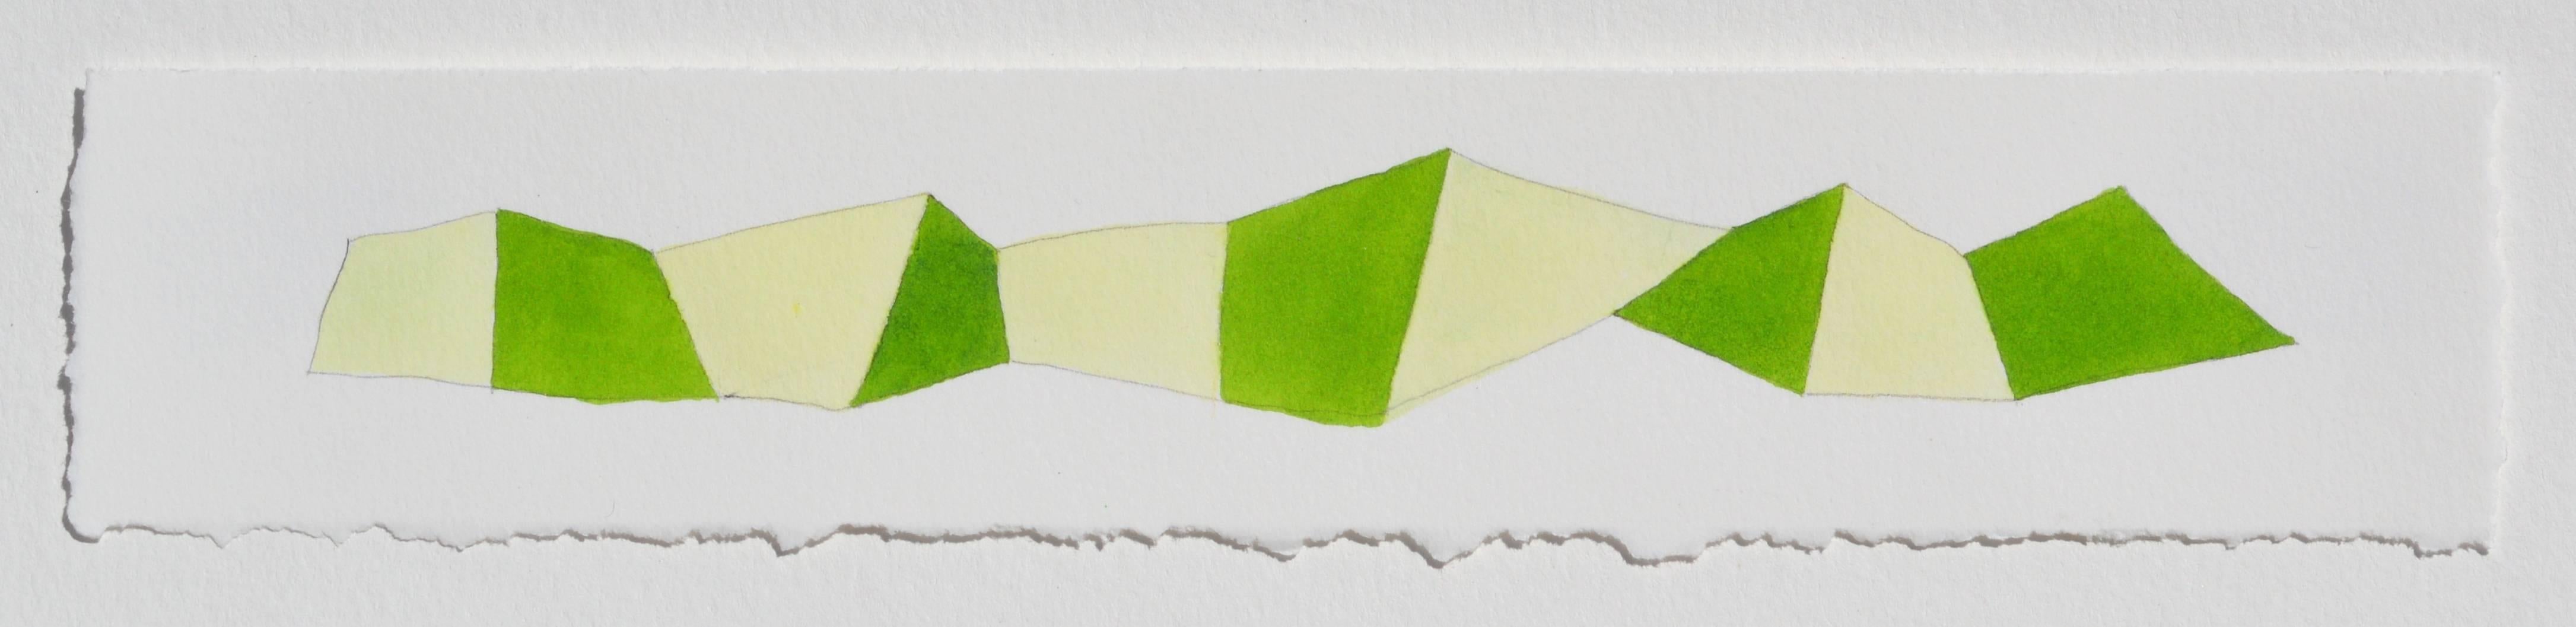 Word Snake 8 - Abstract Geometric Art by Karen Schiff